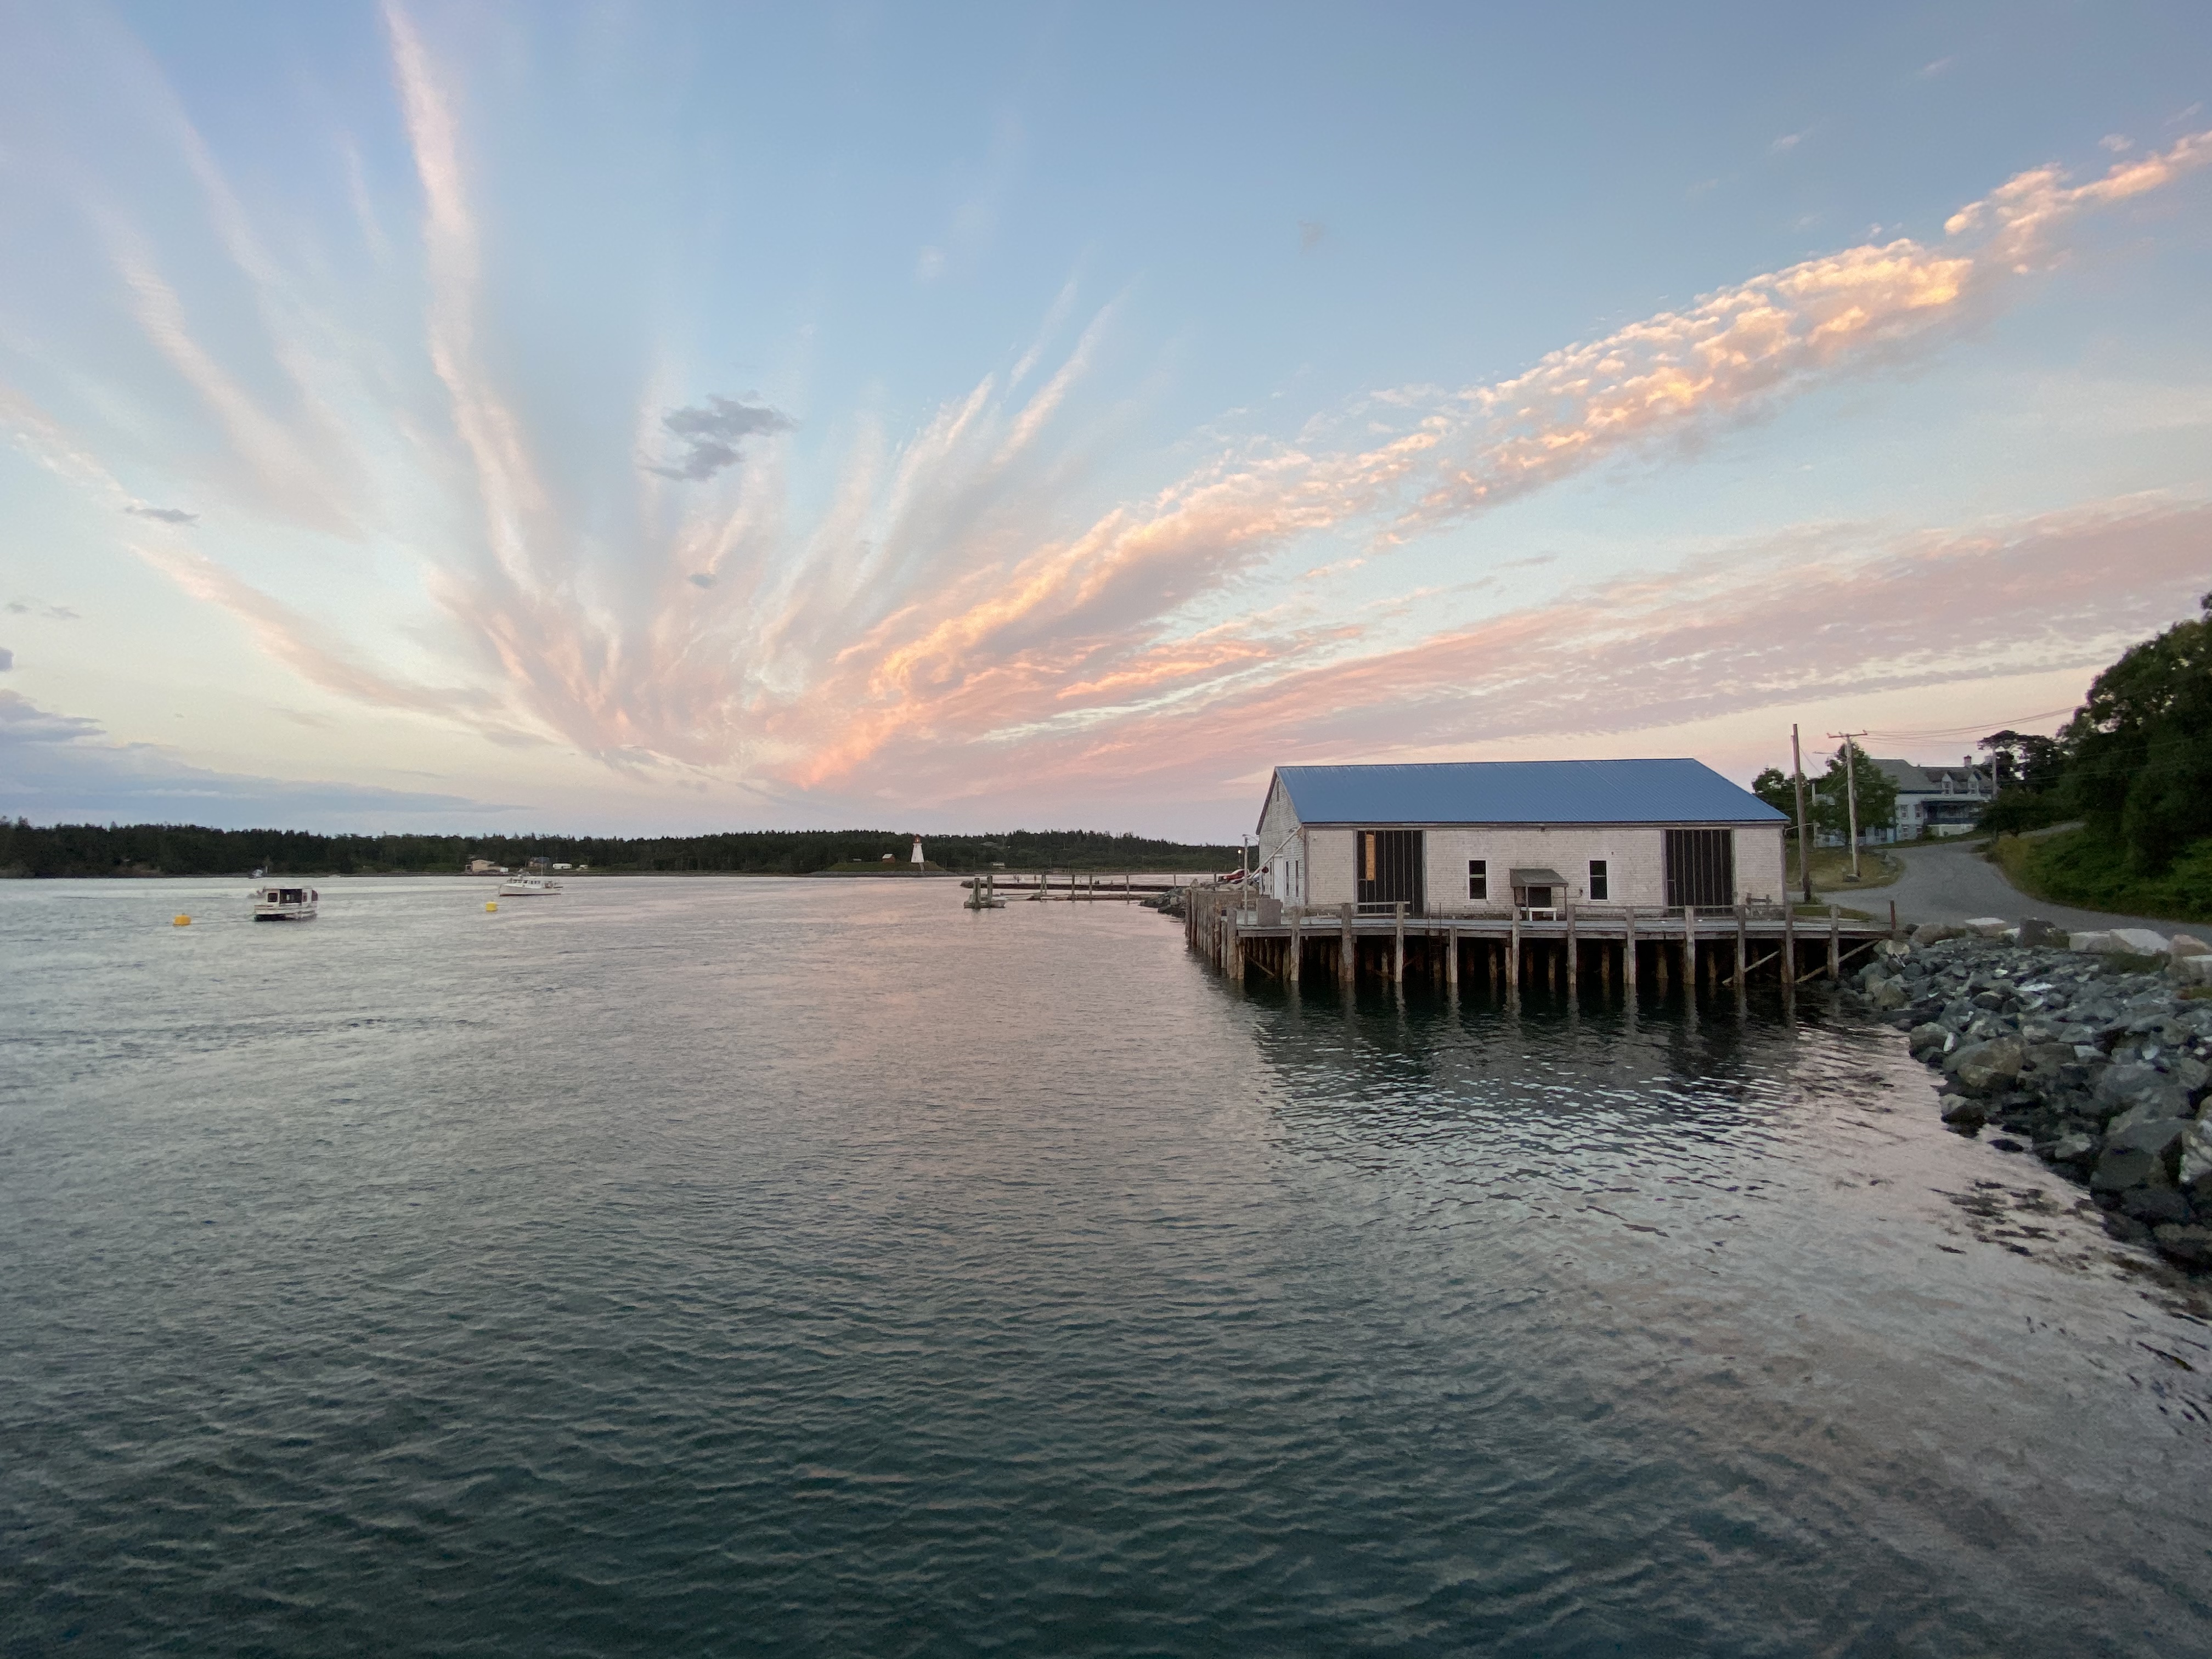 The Lubec Harbor in Maine